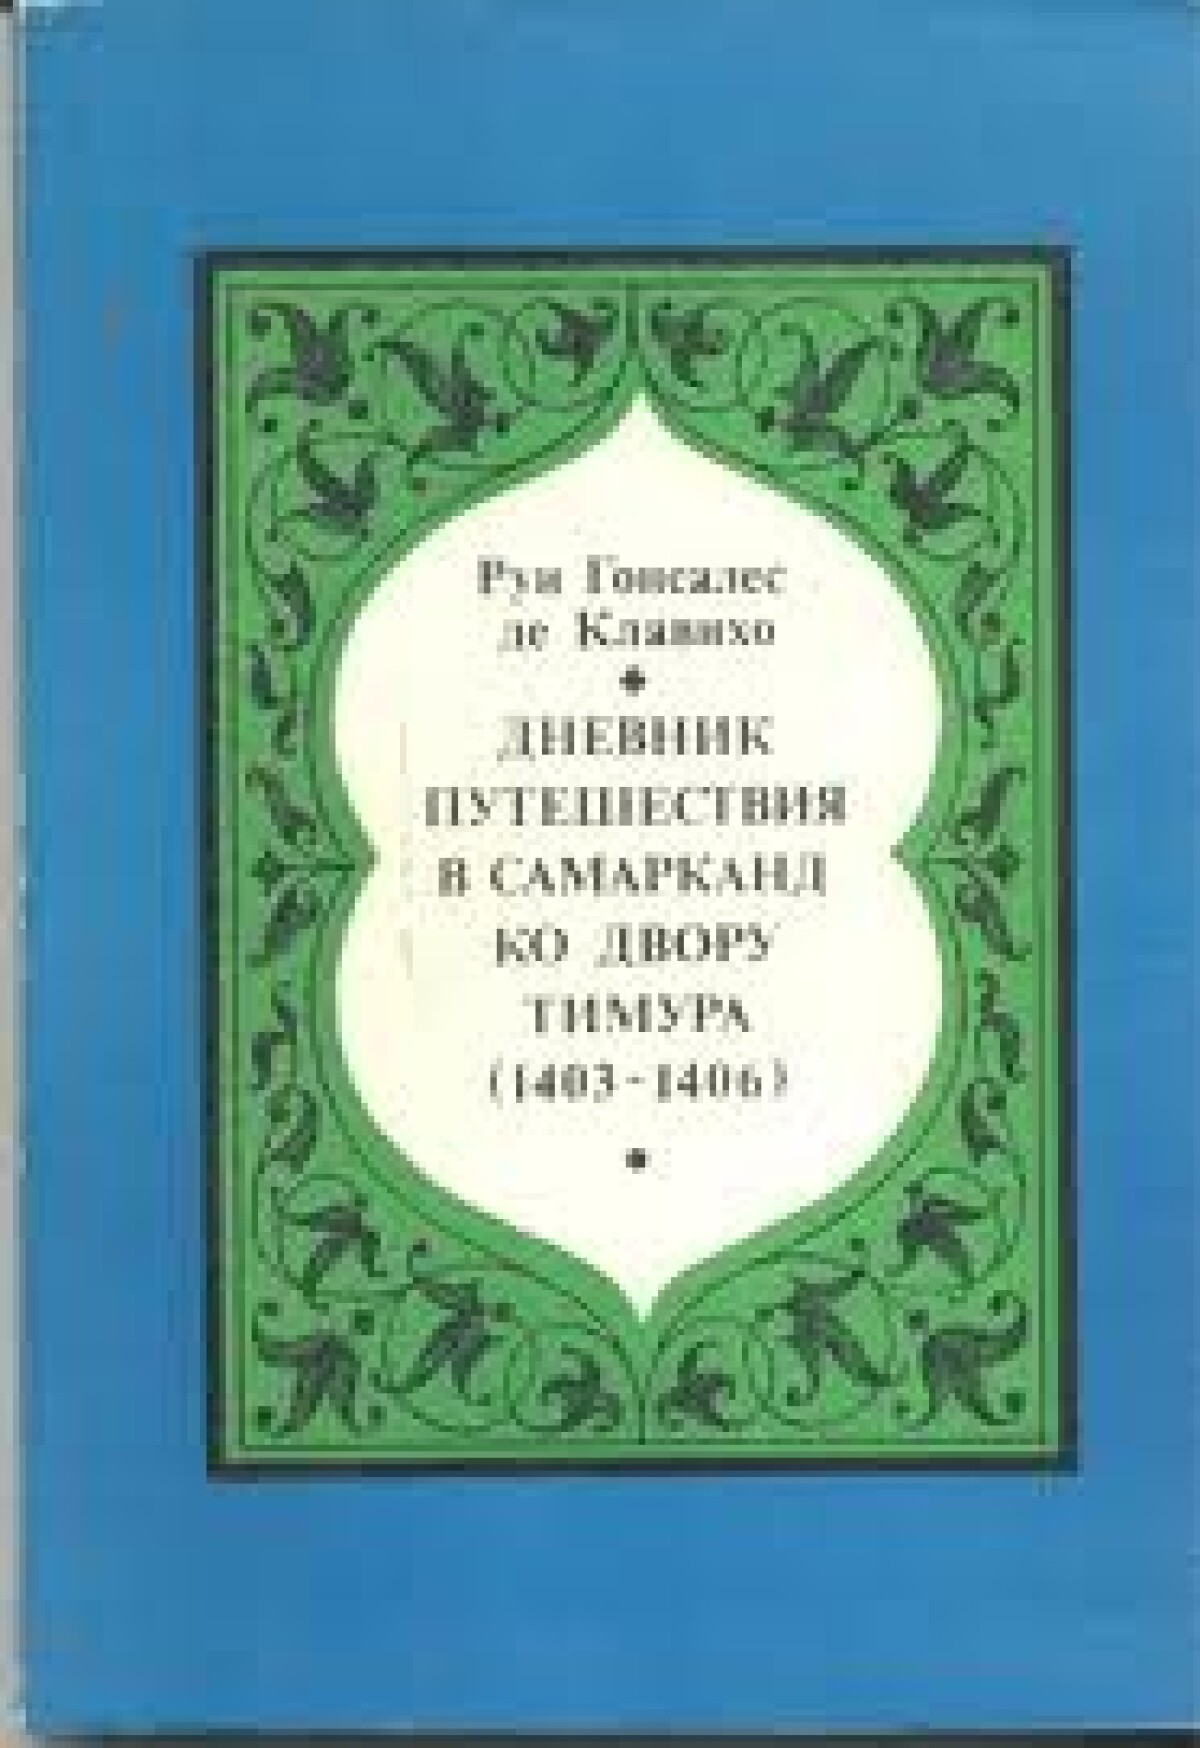 Дневник путешествия в Самарканд ко двору Тимура - e-history.kz